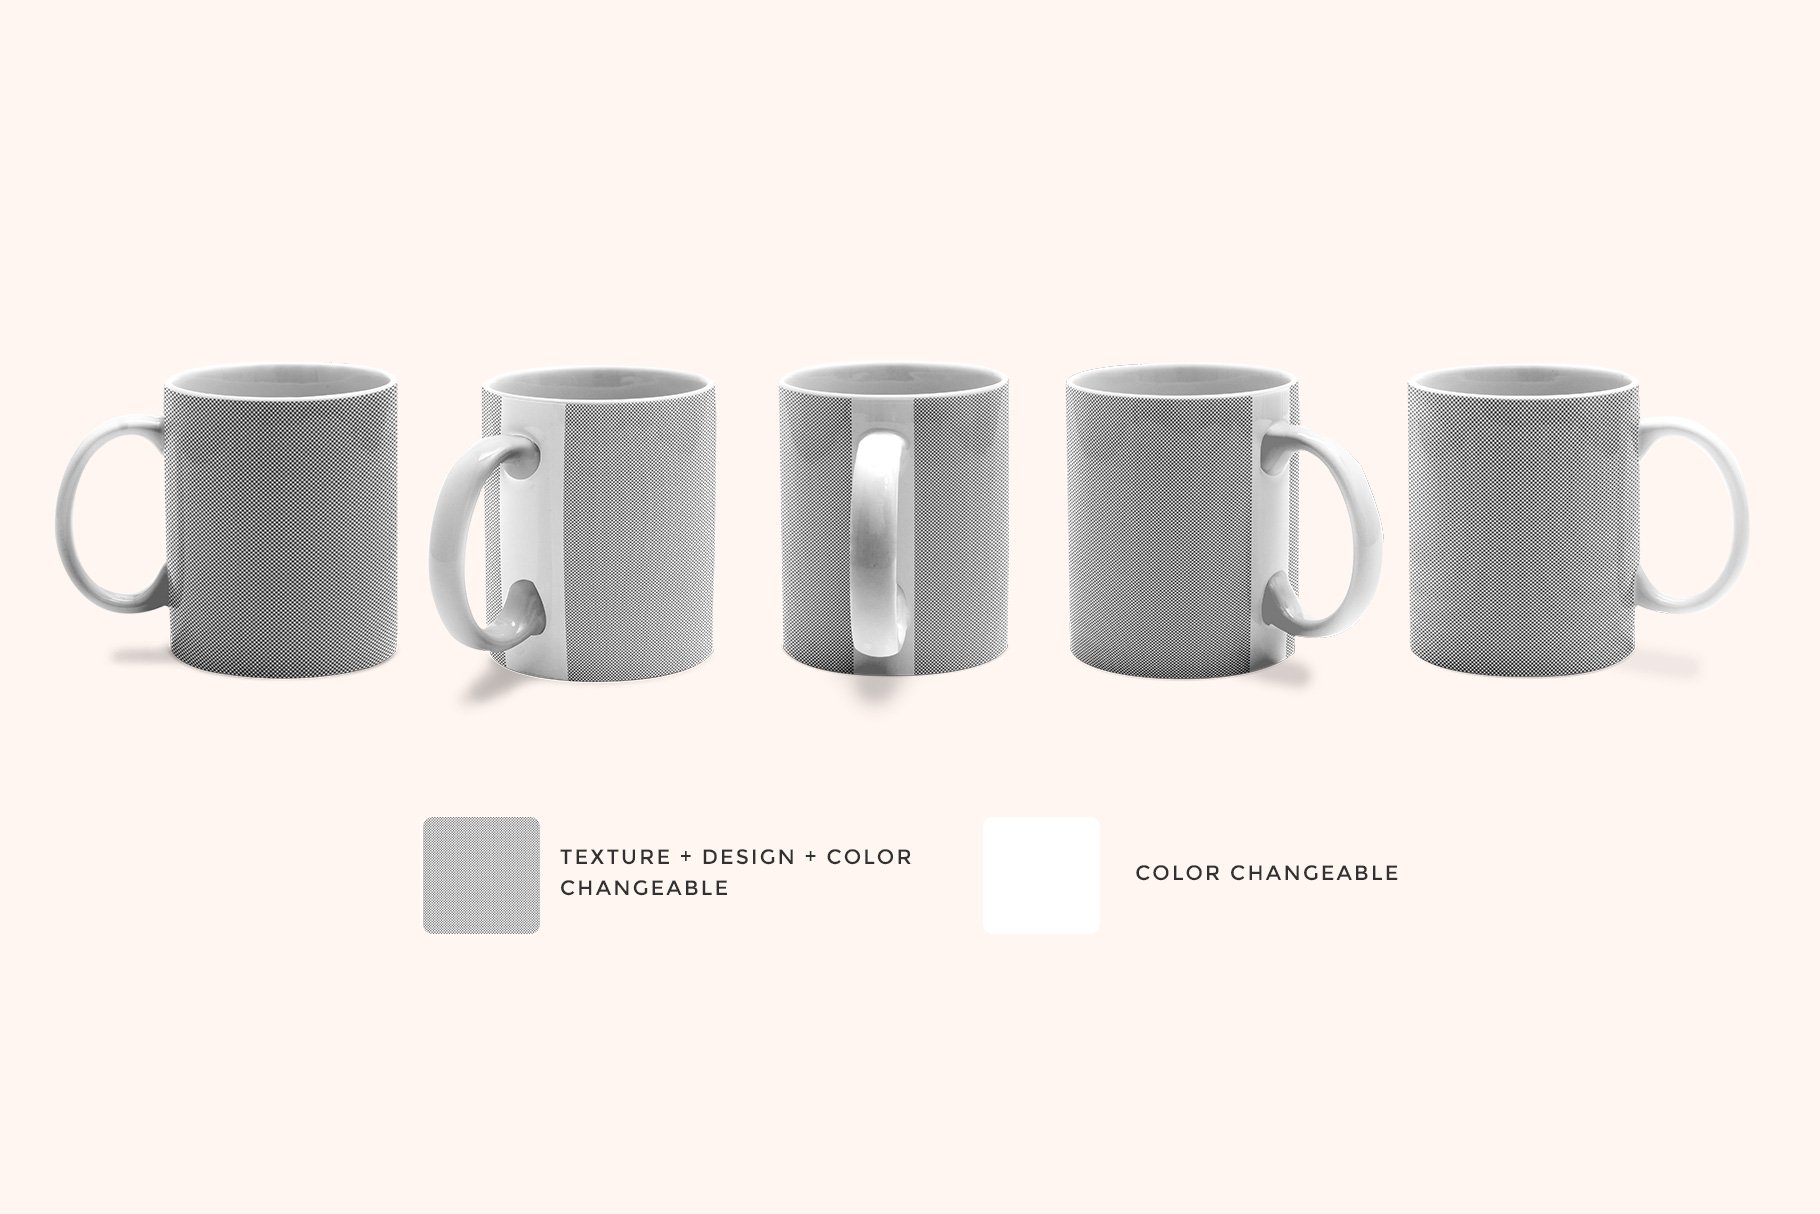 ceramic coffee mugs mockup set image preview 6 540